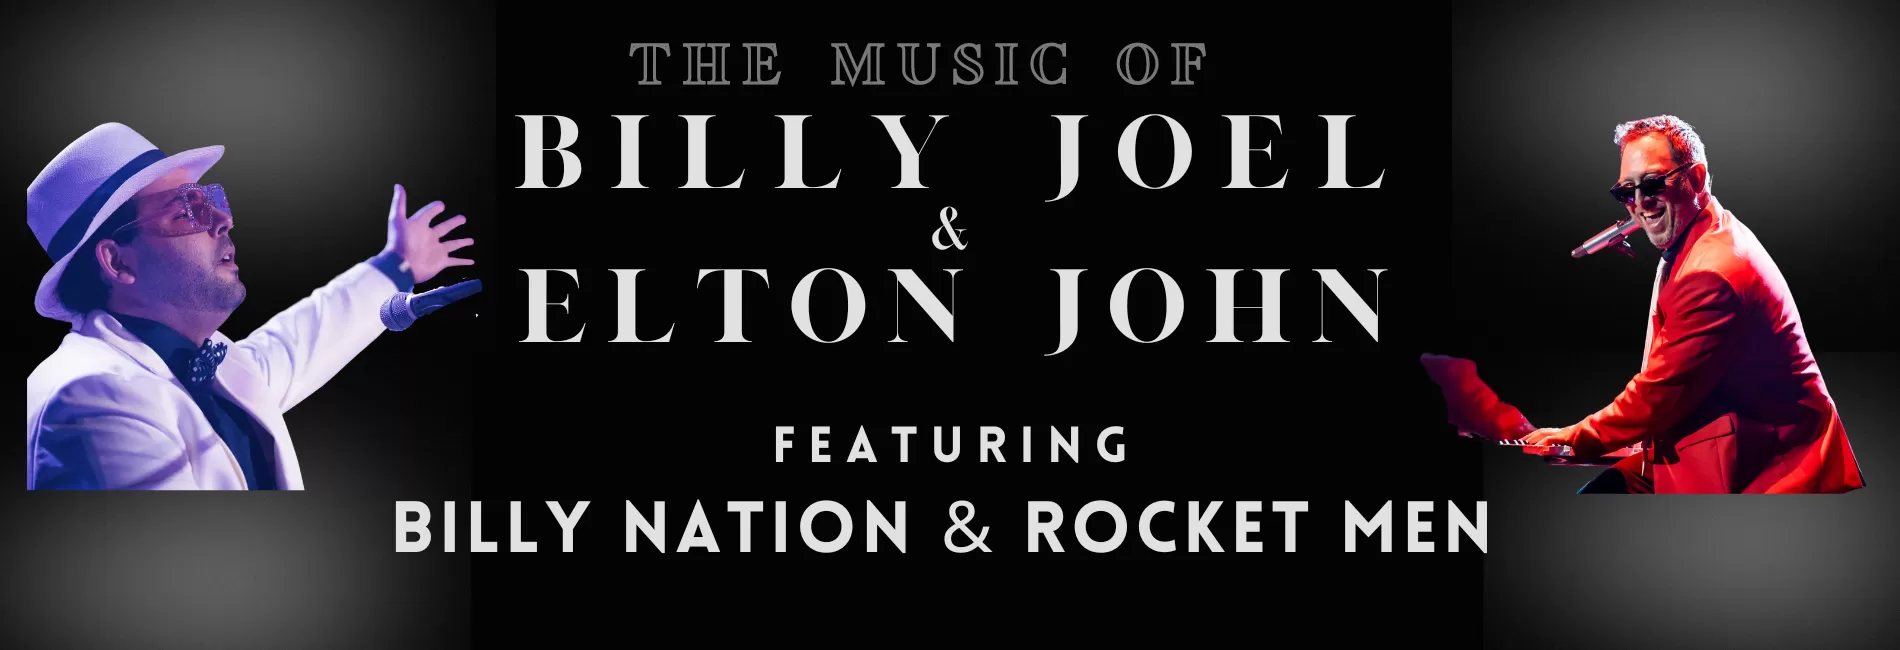 The Music of Billy Joel & Elton John feat. Billy Nation and Rocket Men